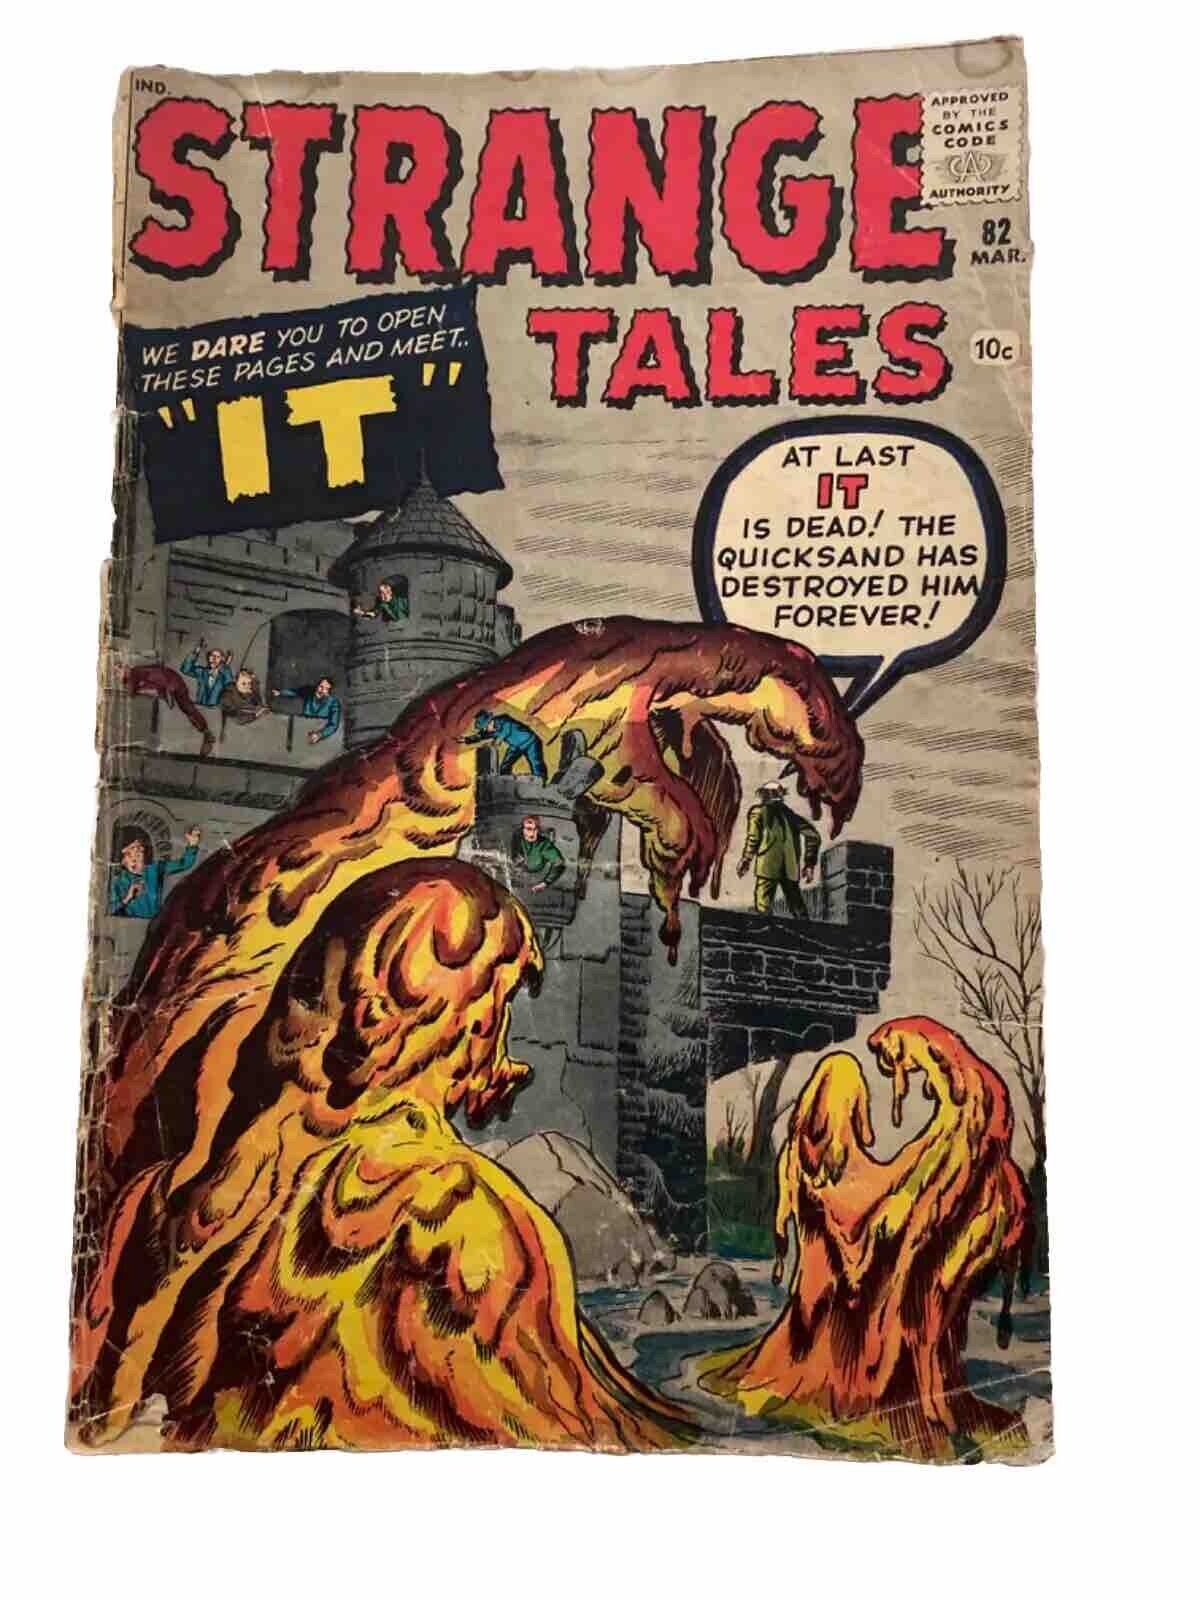 Vintage Strange Tales comic Marvel pre hero #82 1960 featuring the monster IT +